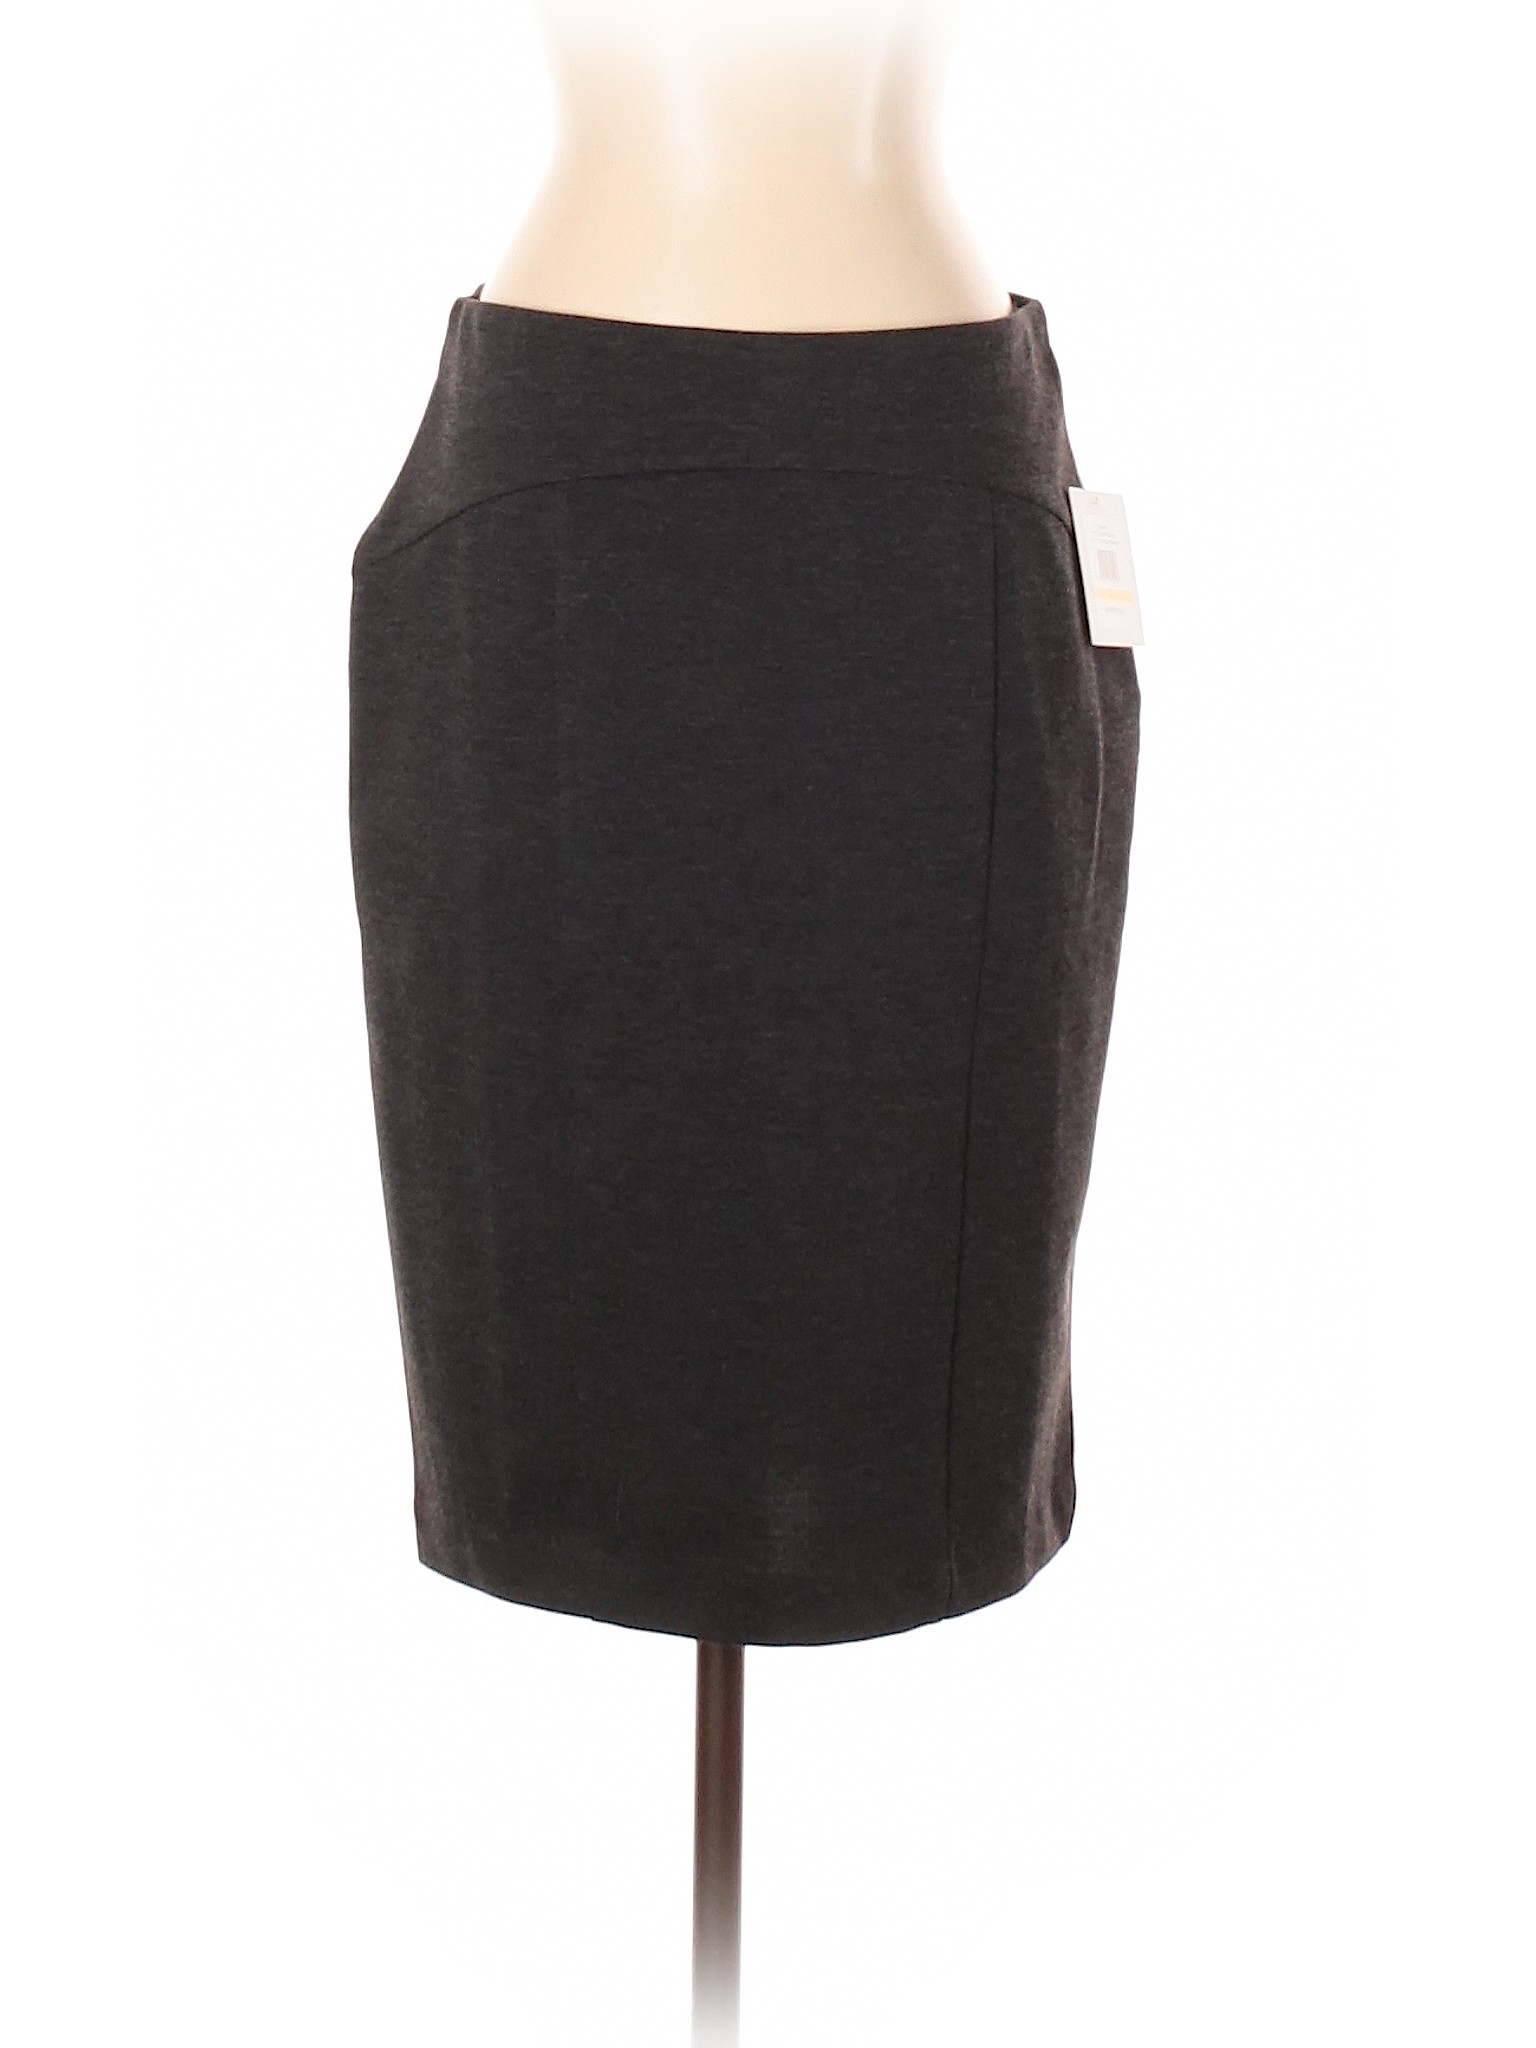 Ellen Tracy Women's Skirts On Sale Up To 90% Off Retail | thredUP